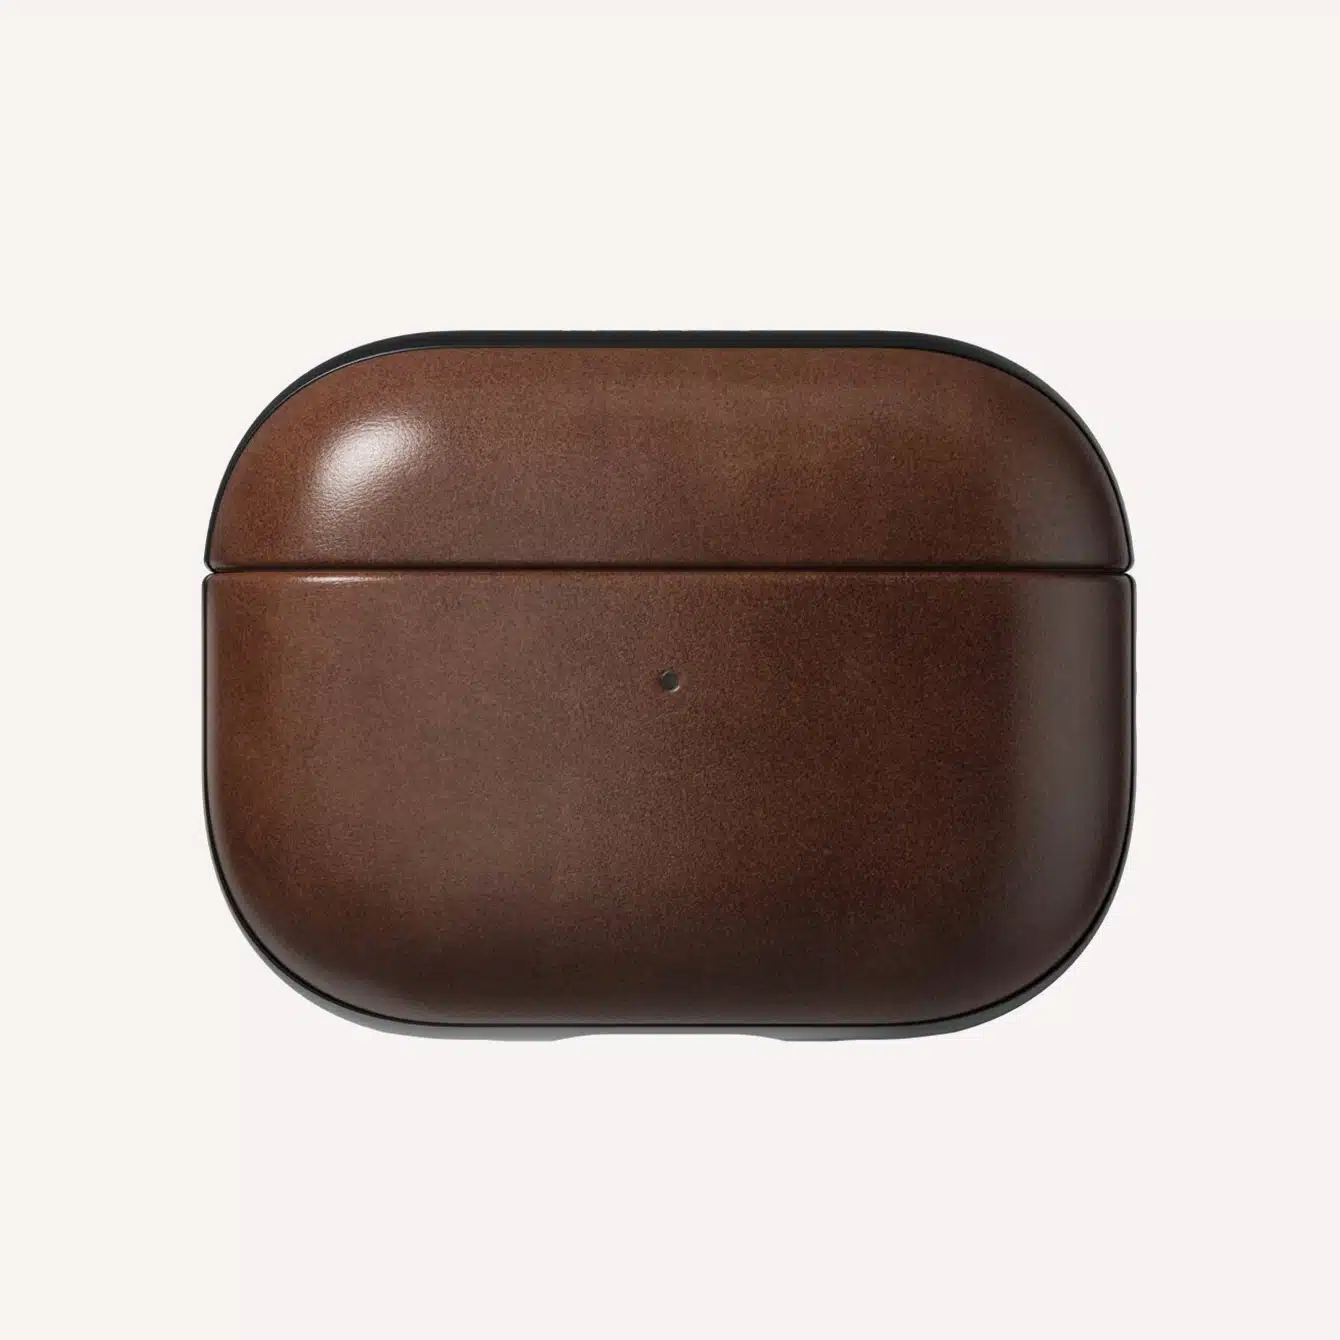 Nomad Modern Leather Case